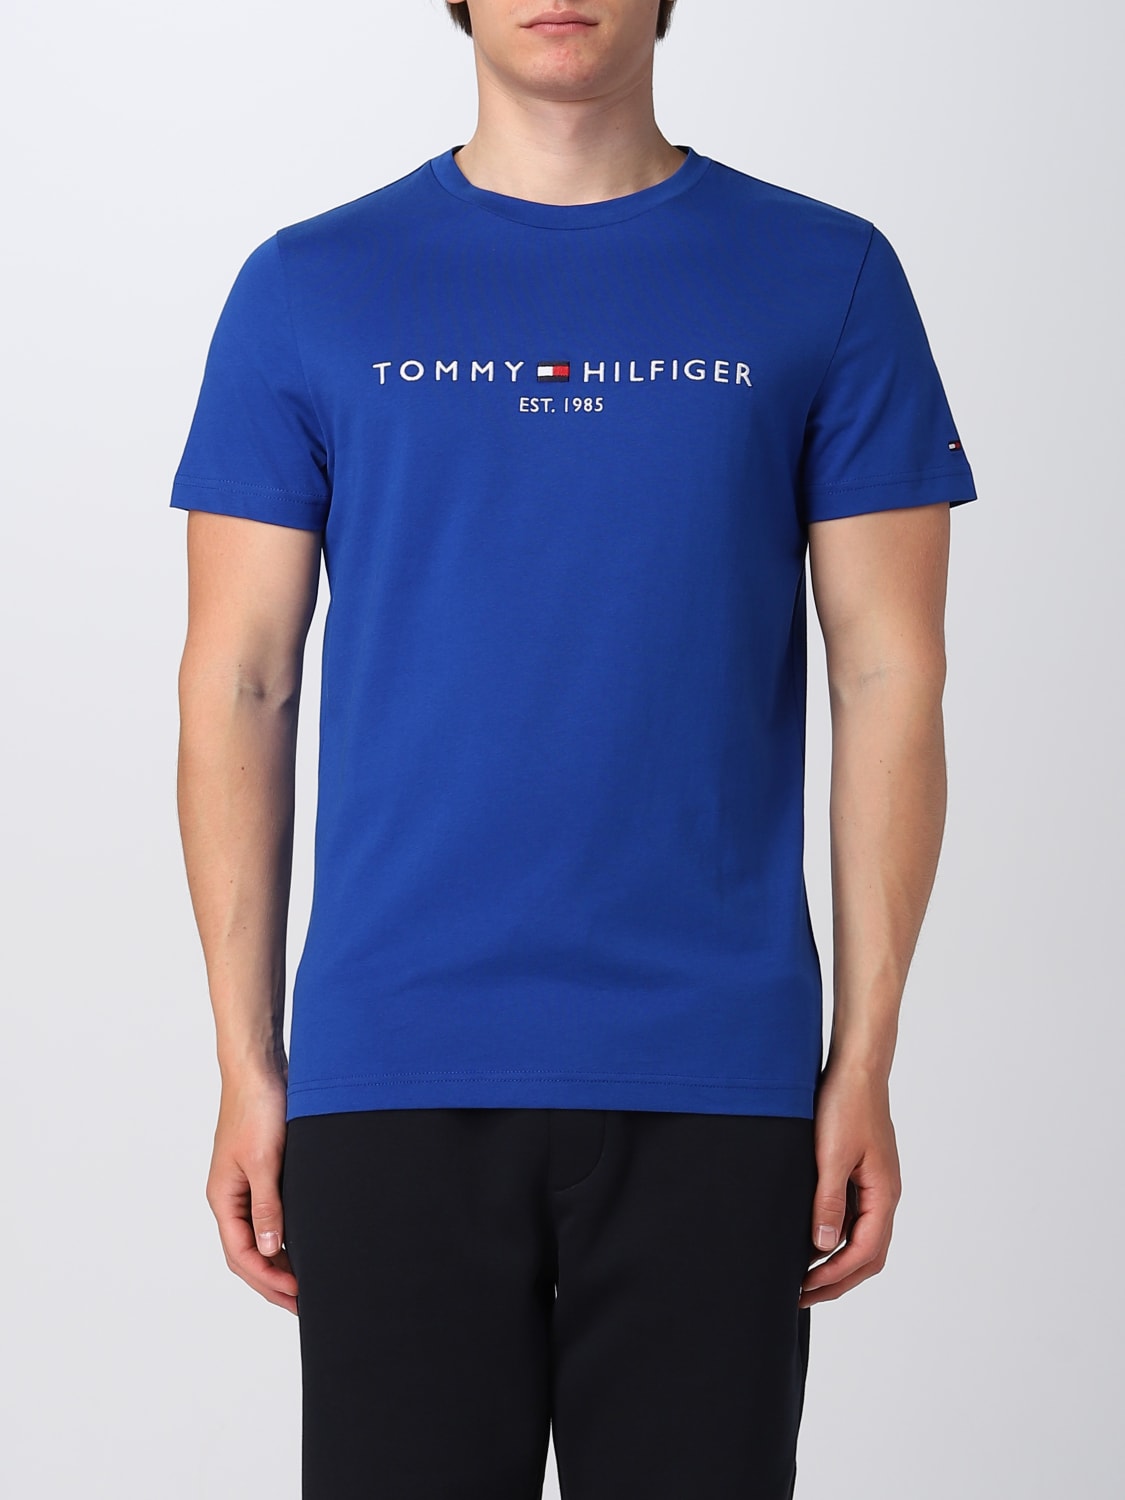 TOMMY HILFIGER: for man Blue | Tommy Hilfiger MW0MW11797 online at GIGLIO.COM